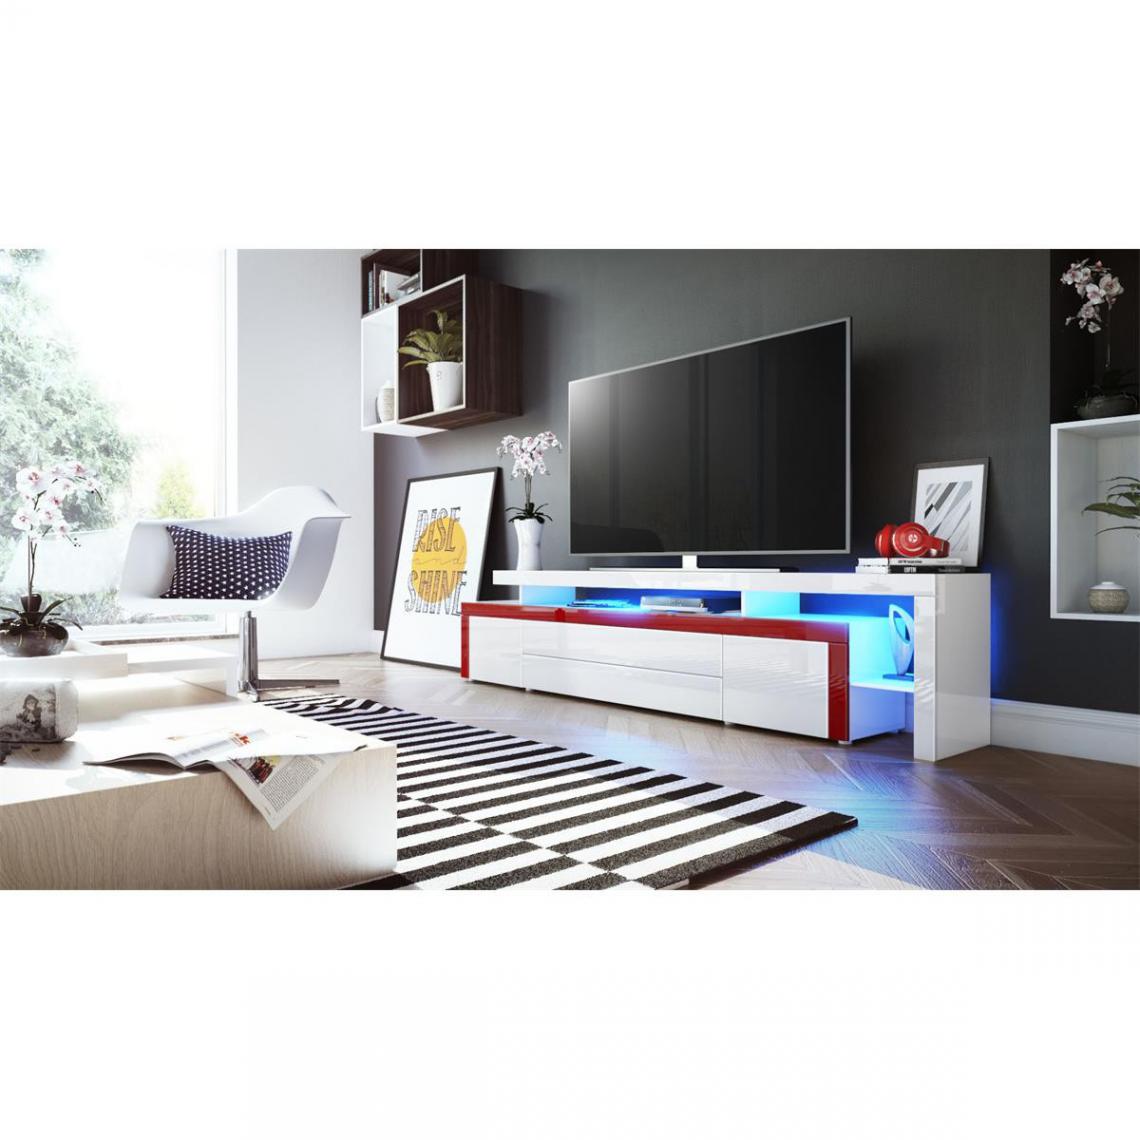 Mpc - Meuble tv blanc brillant et bordure bordeaux + led rgb (LxHxP): 227 x 52 x 35 cm - Meubles TV, Hi-Fi